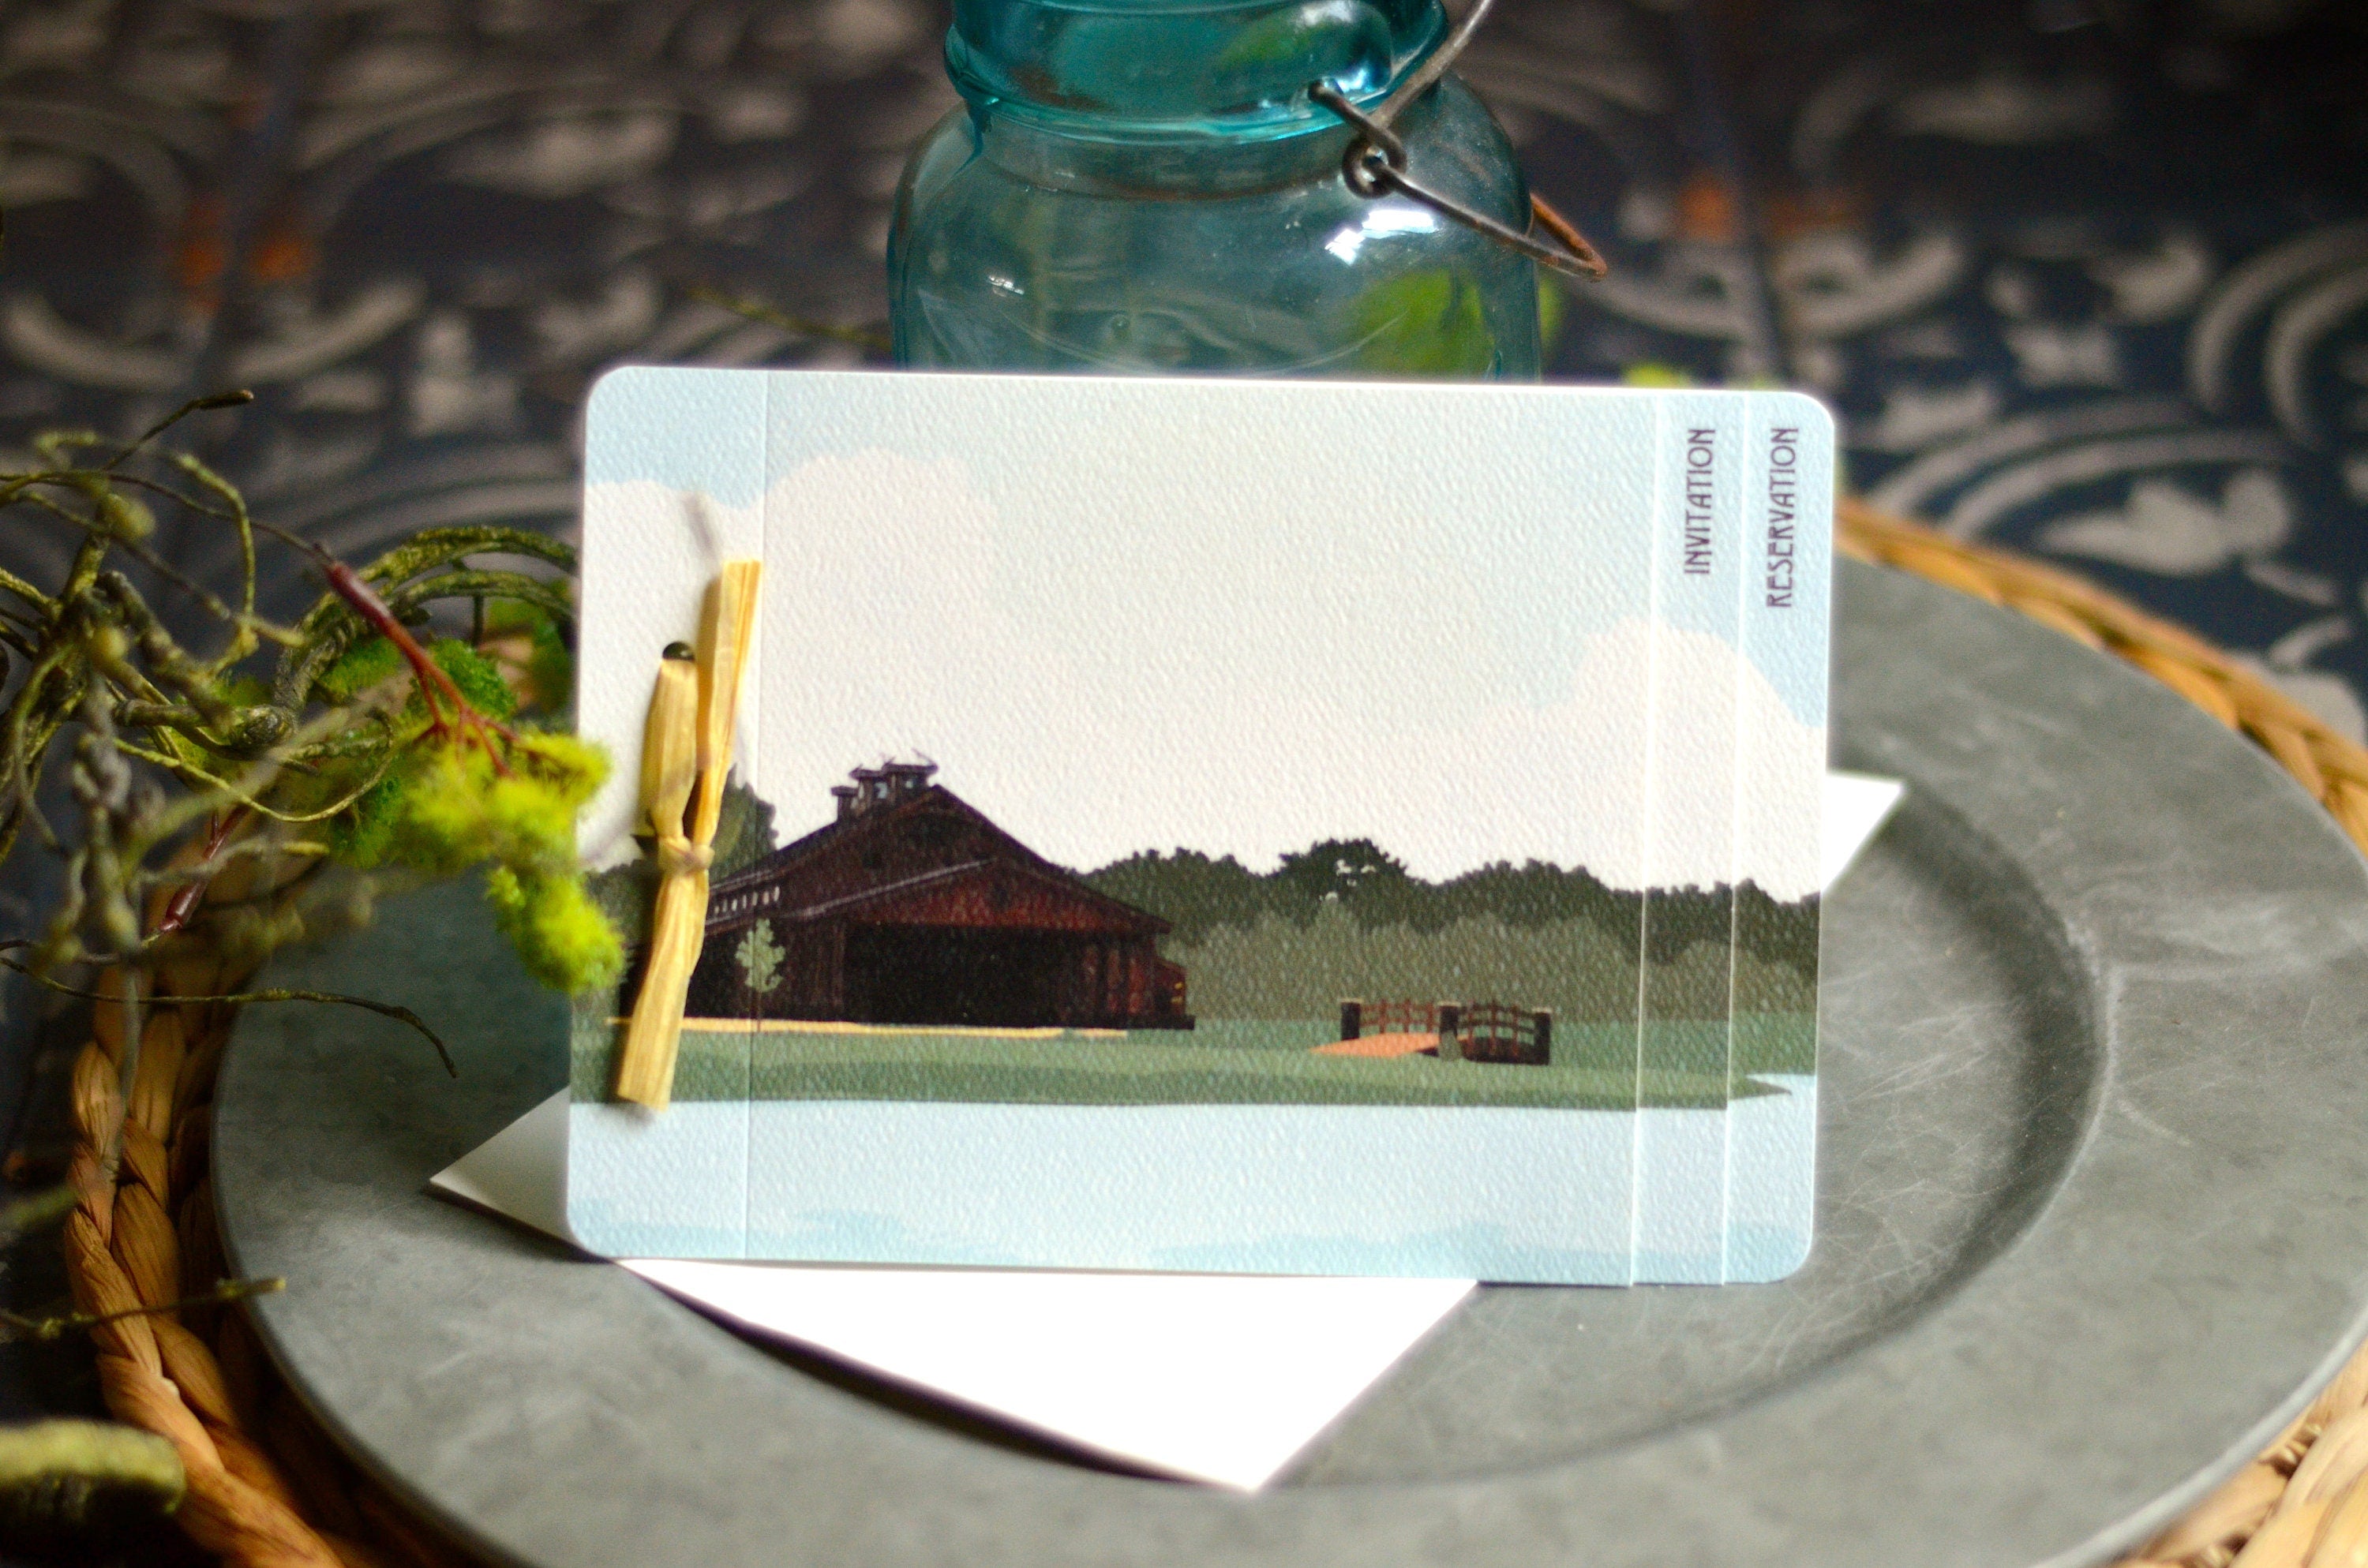 Sycamore Farms Arrington Nasville Tennessee Landscape Wedding Livret 3pg Booklet Invitation with Envelope and Tear-Off RSVP